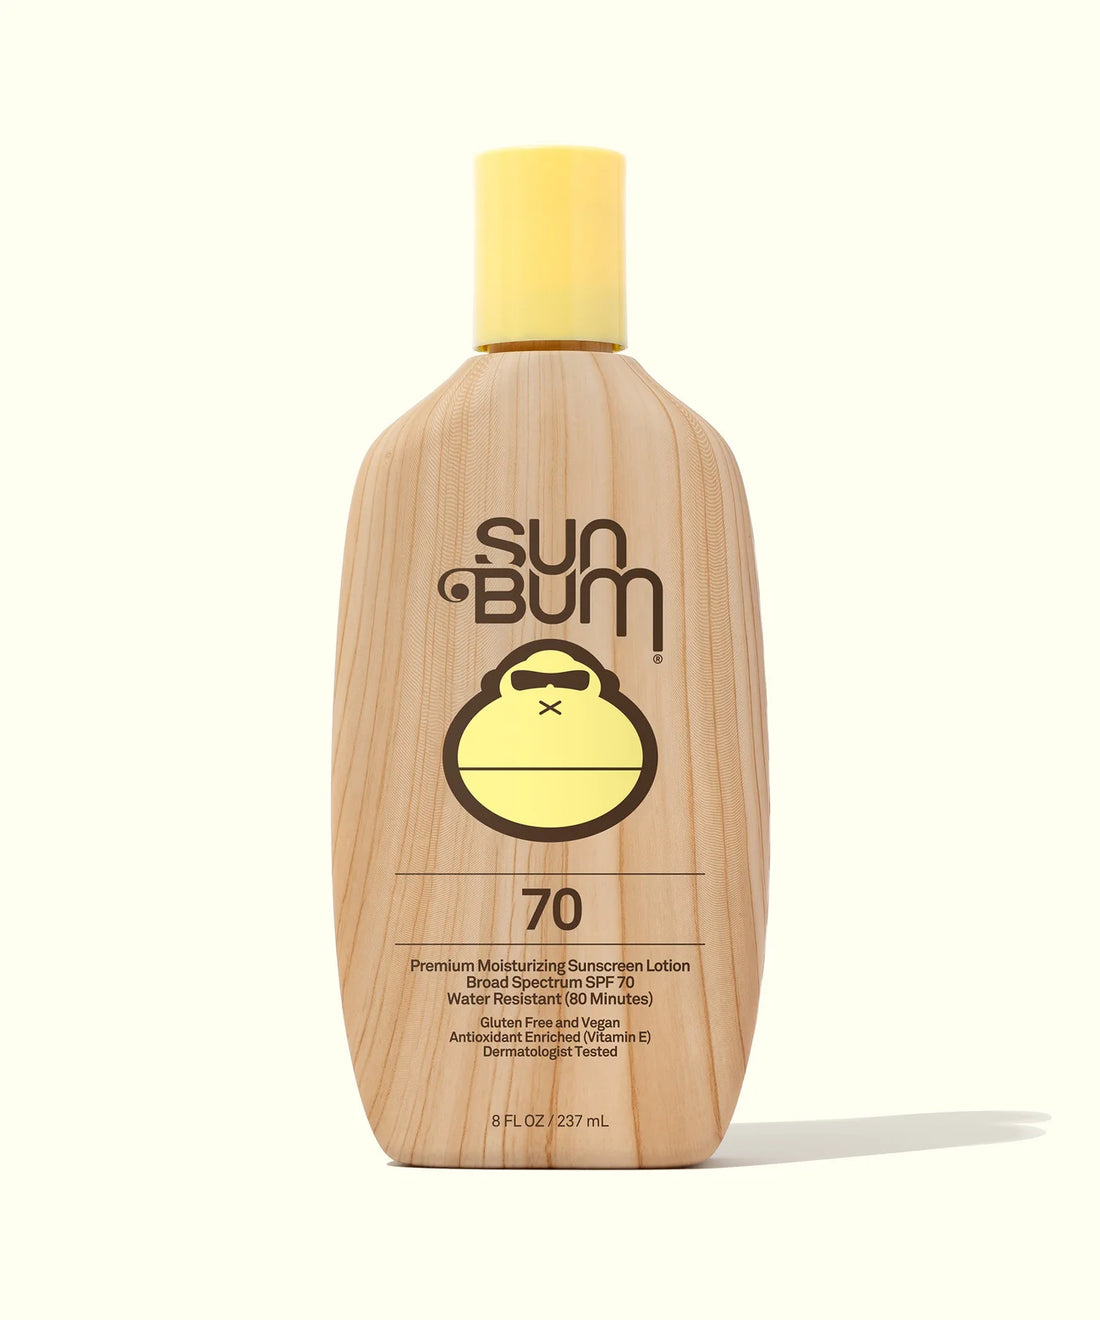 Sum Bum Original Sunscreen Lotion